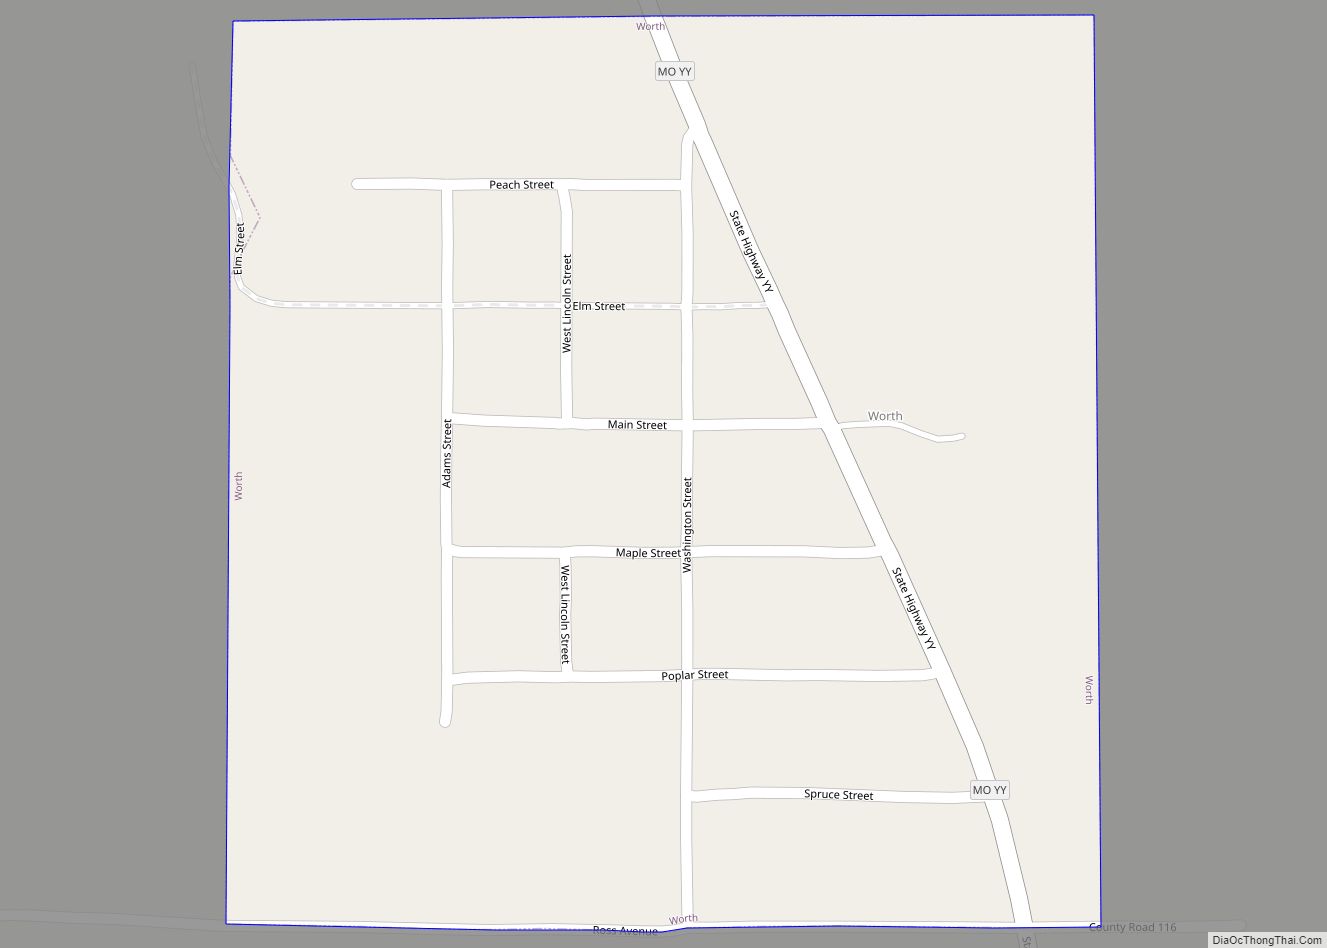 Map of Worth village, Missouri